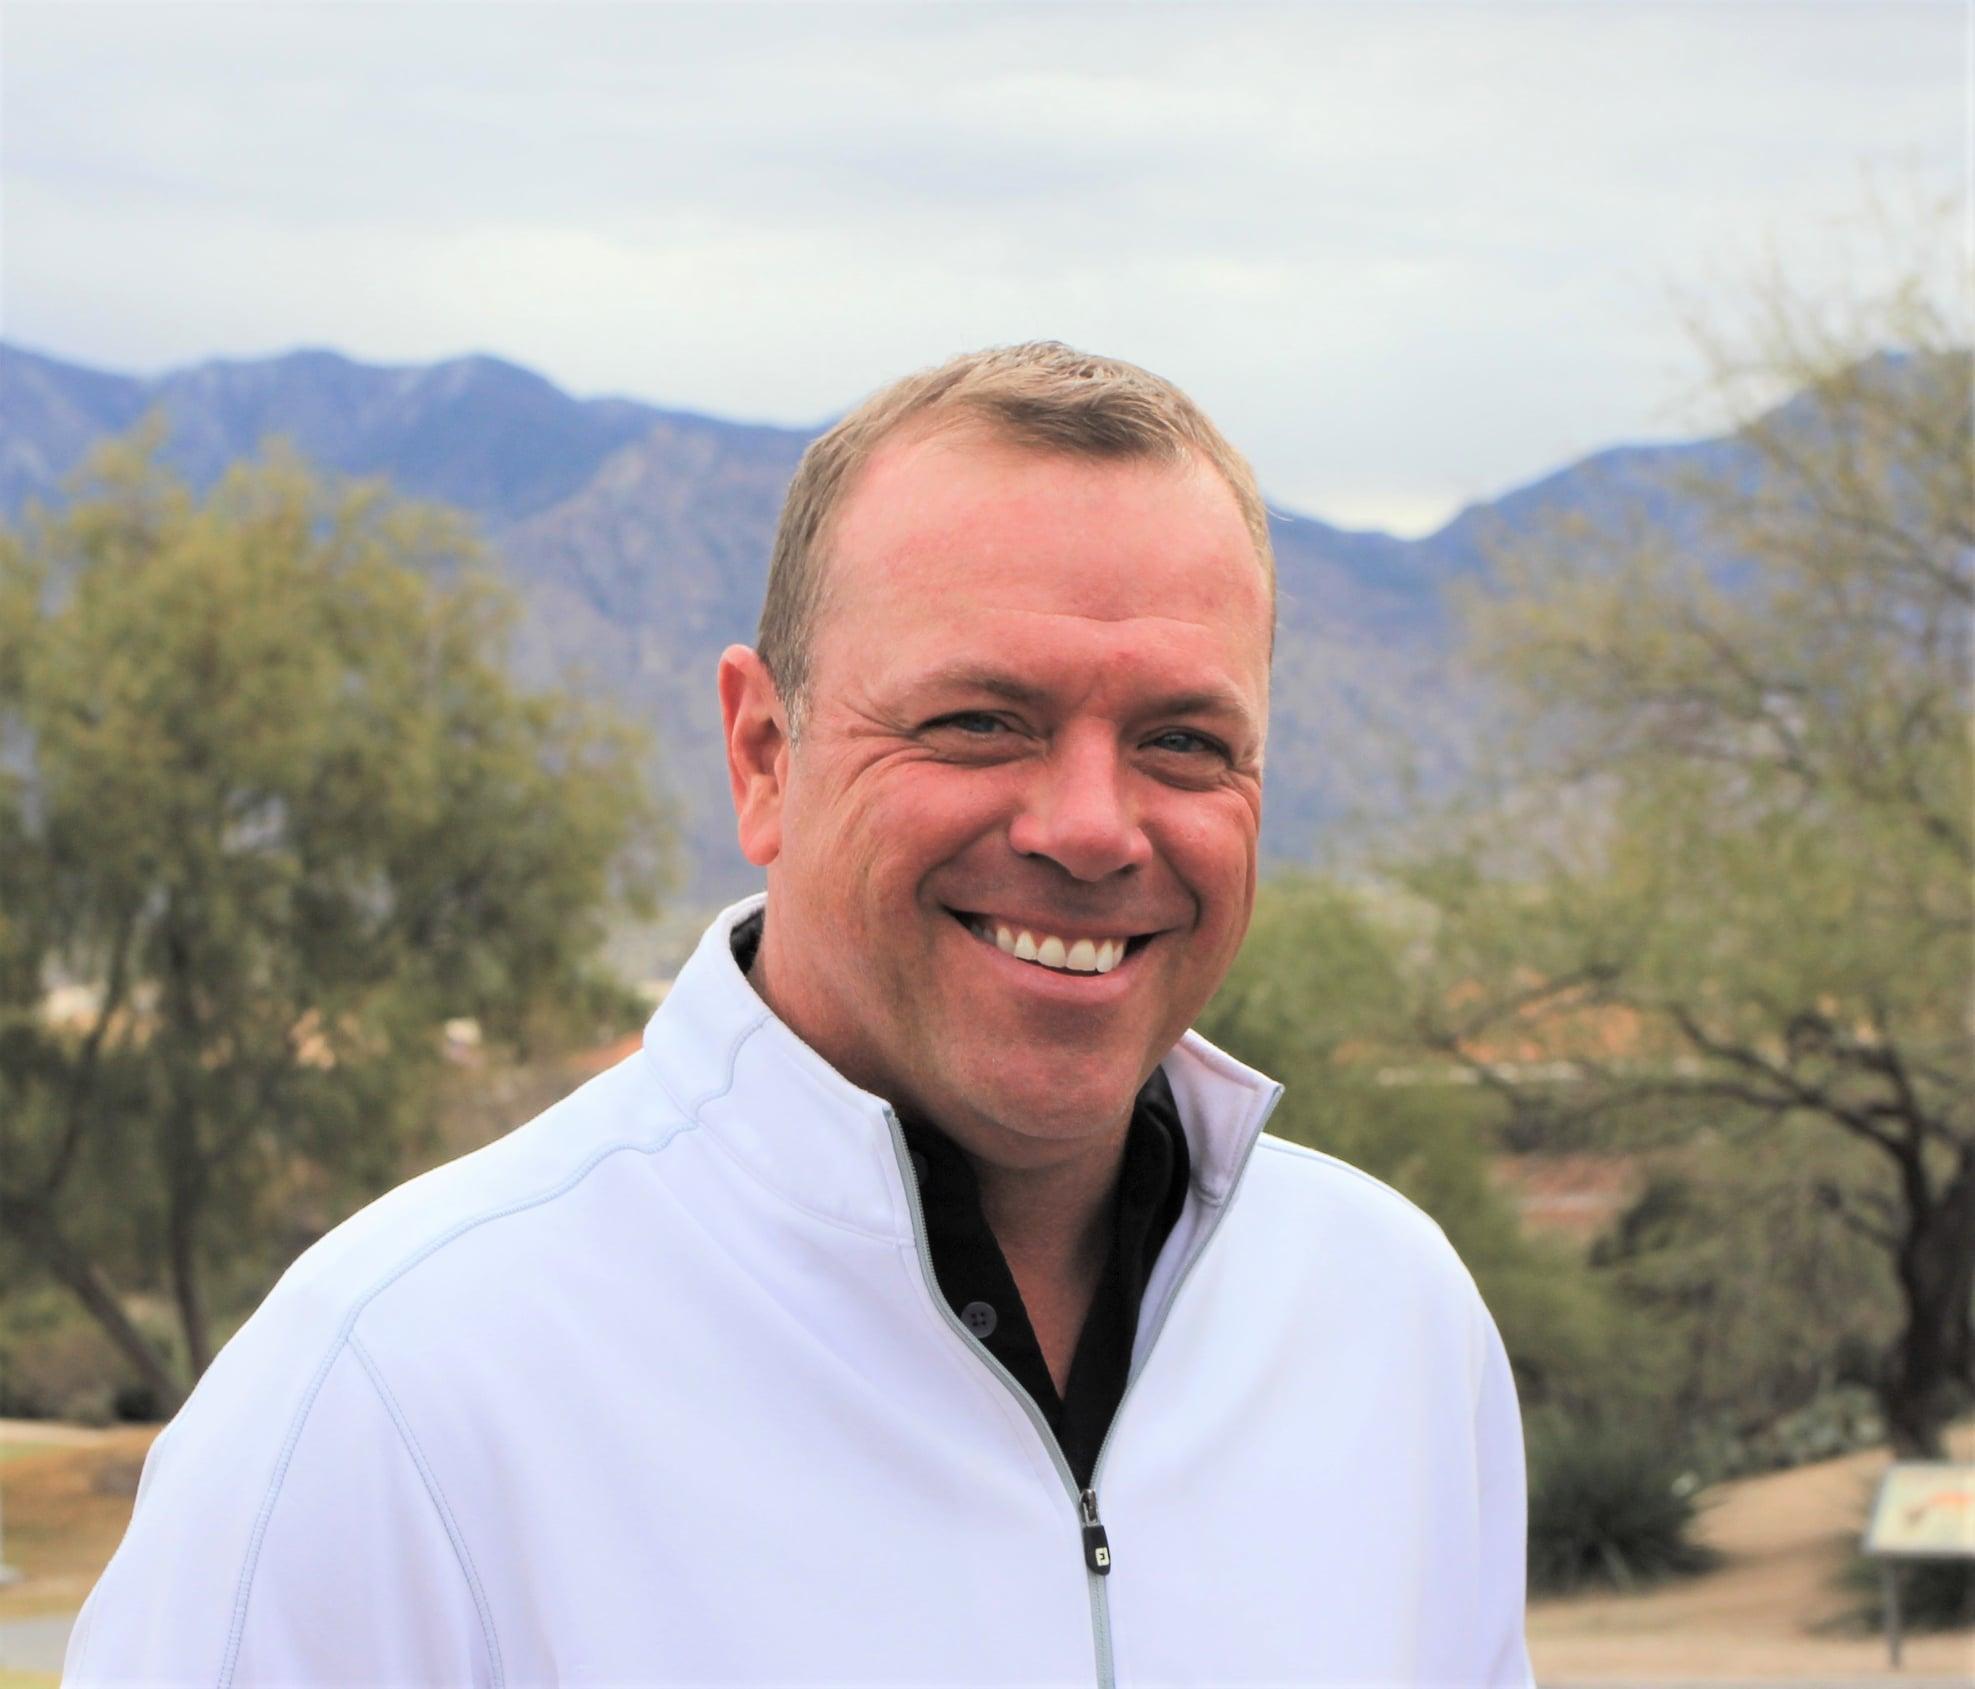 Todd Crain Tournament Coordinator, 1st Assistant Golf Professional, PGA